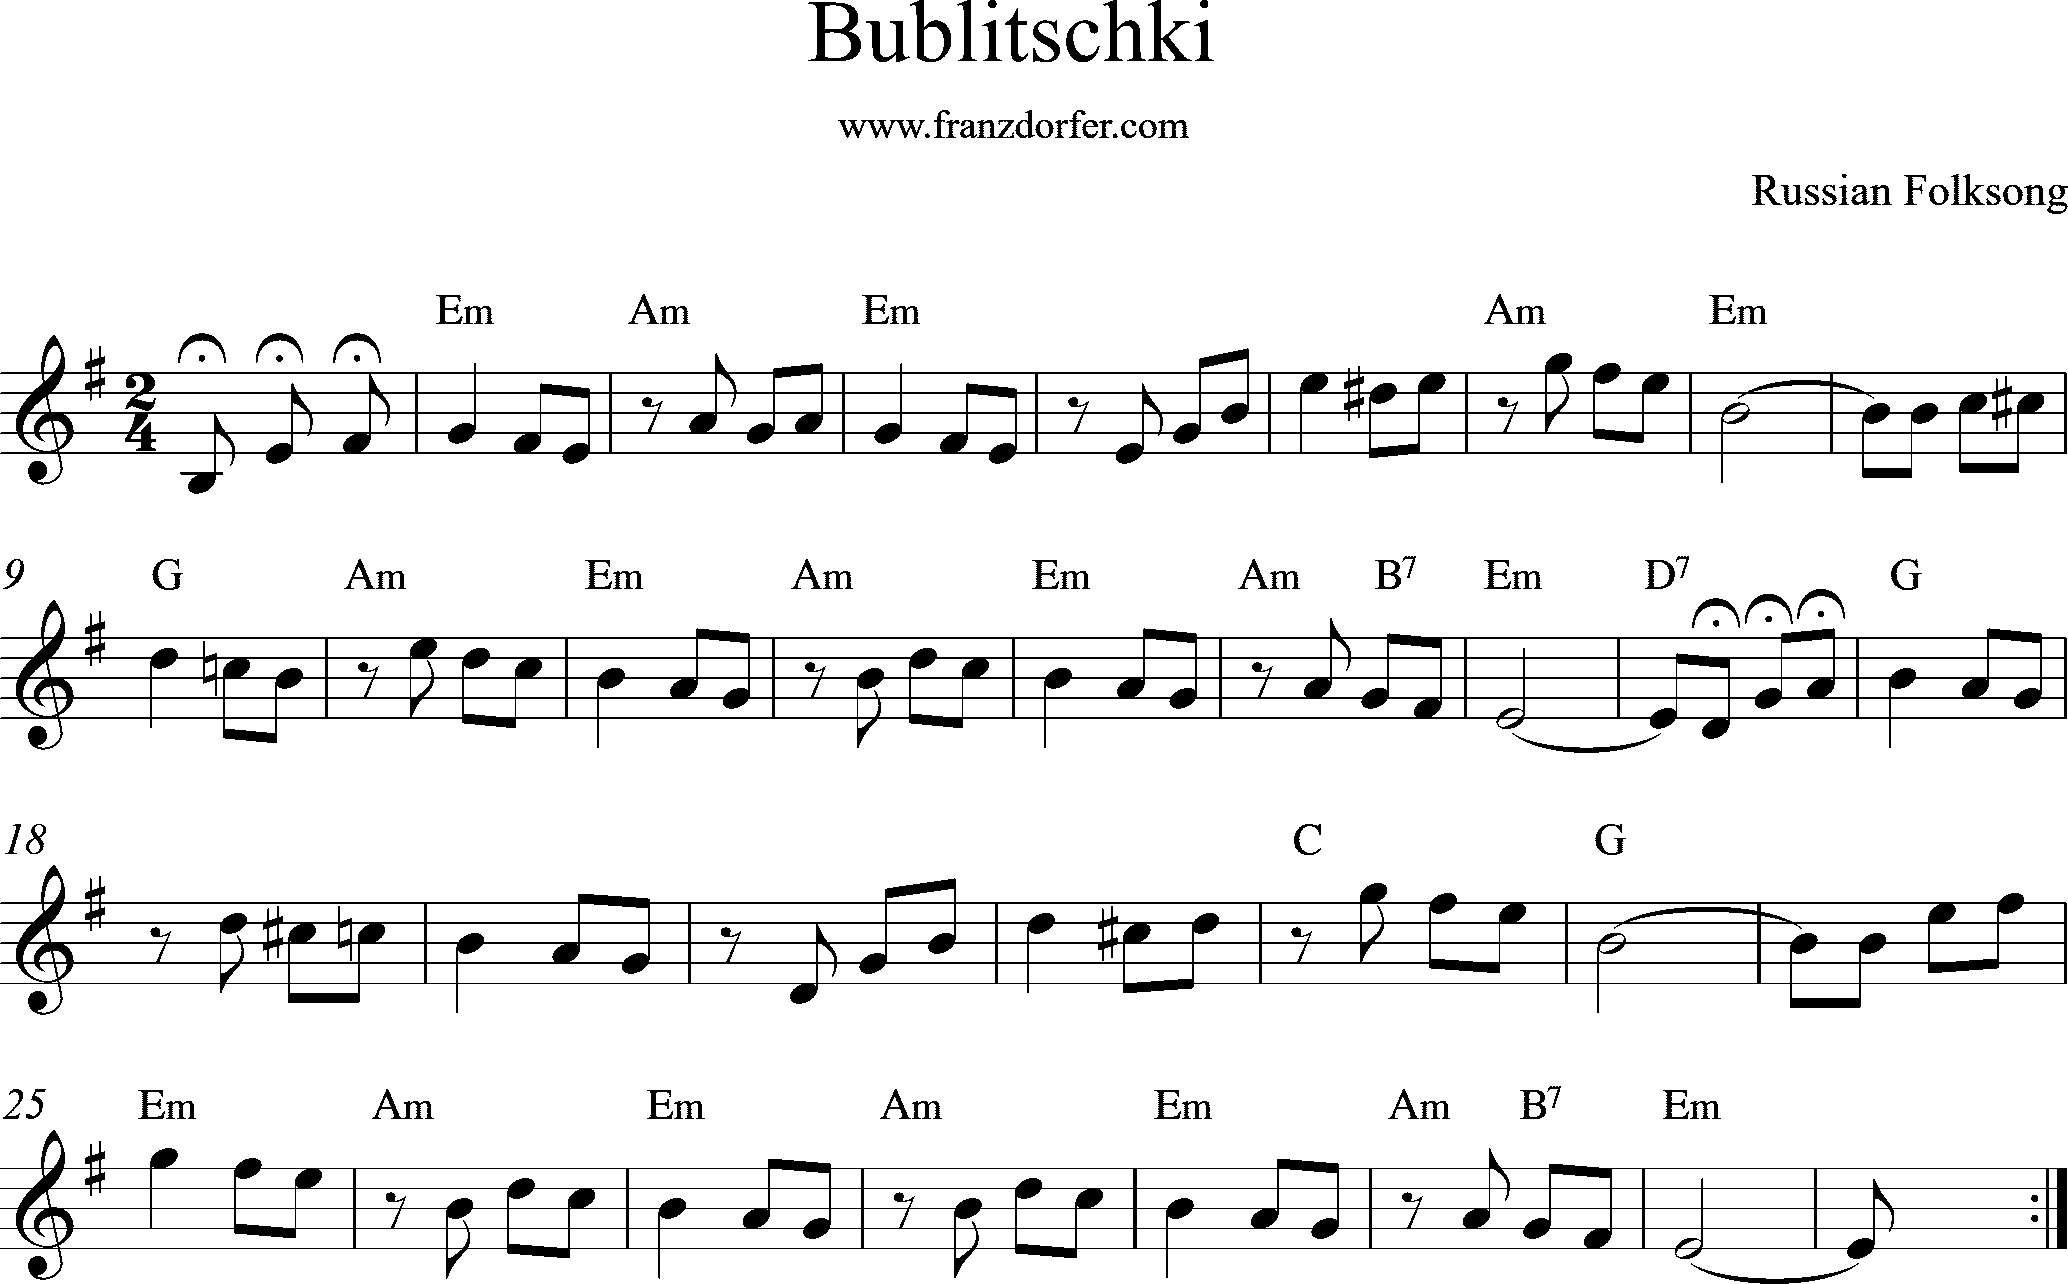 sheetmusic bublitschki